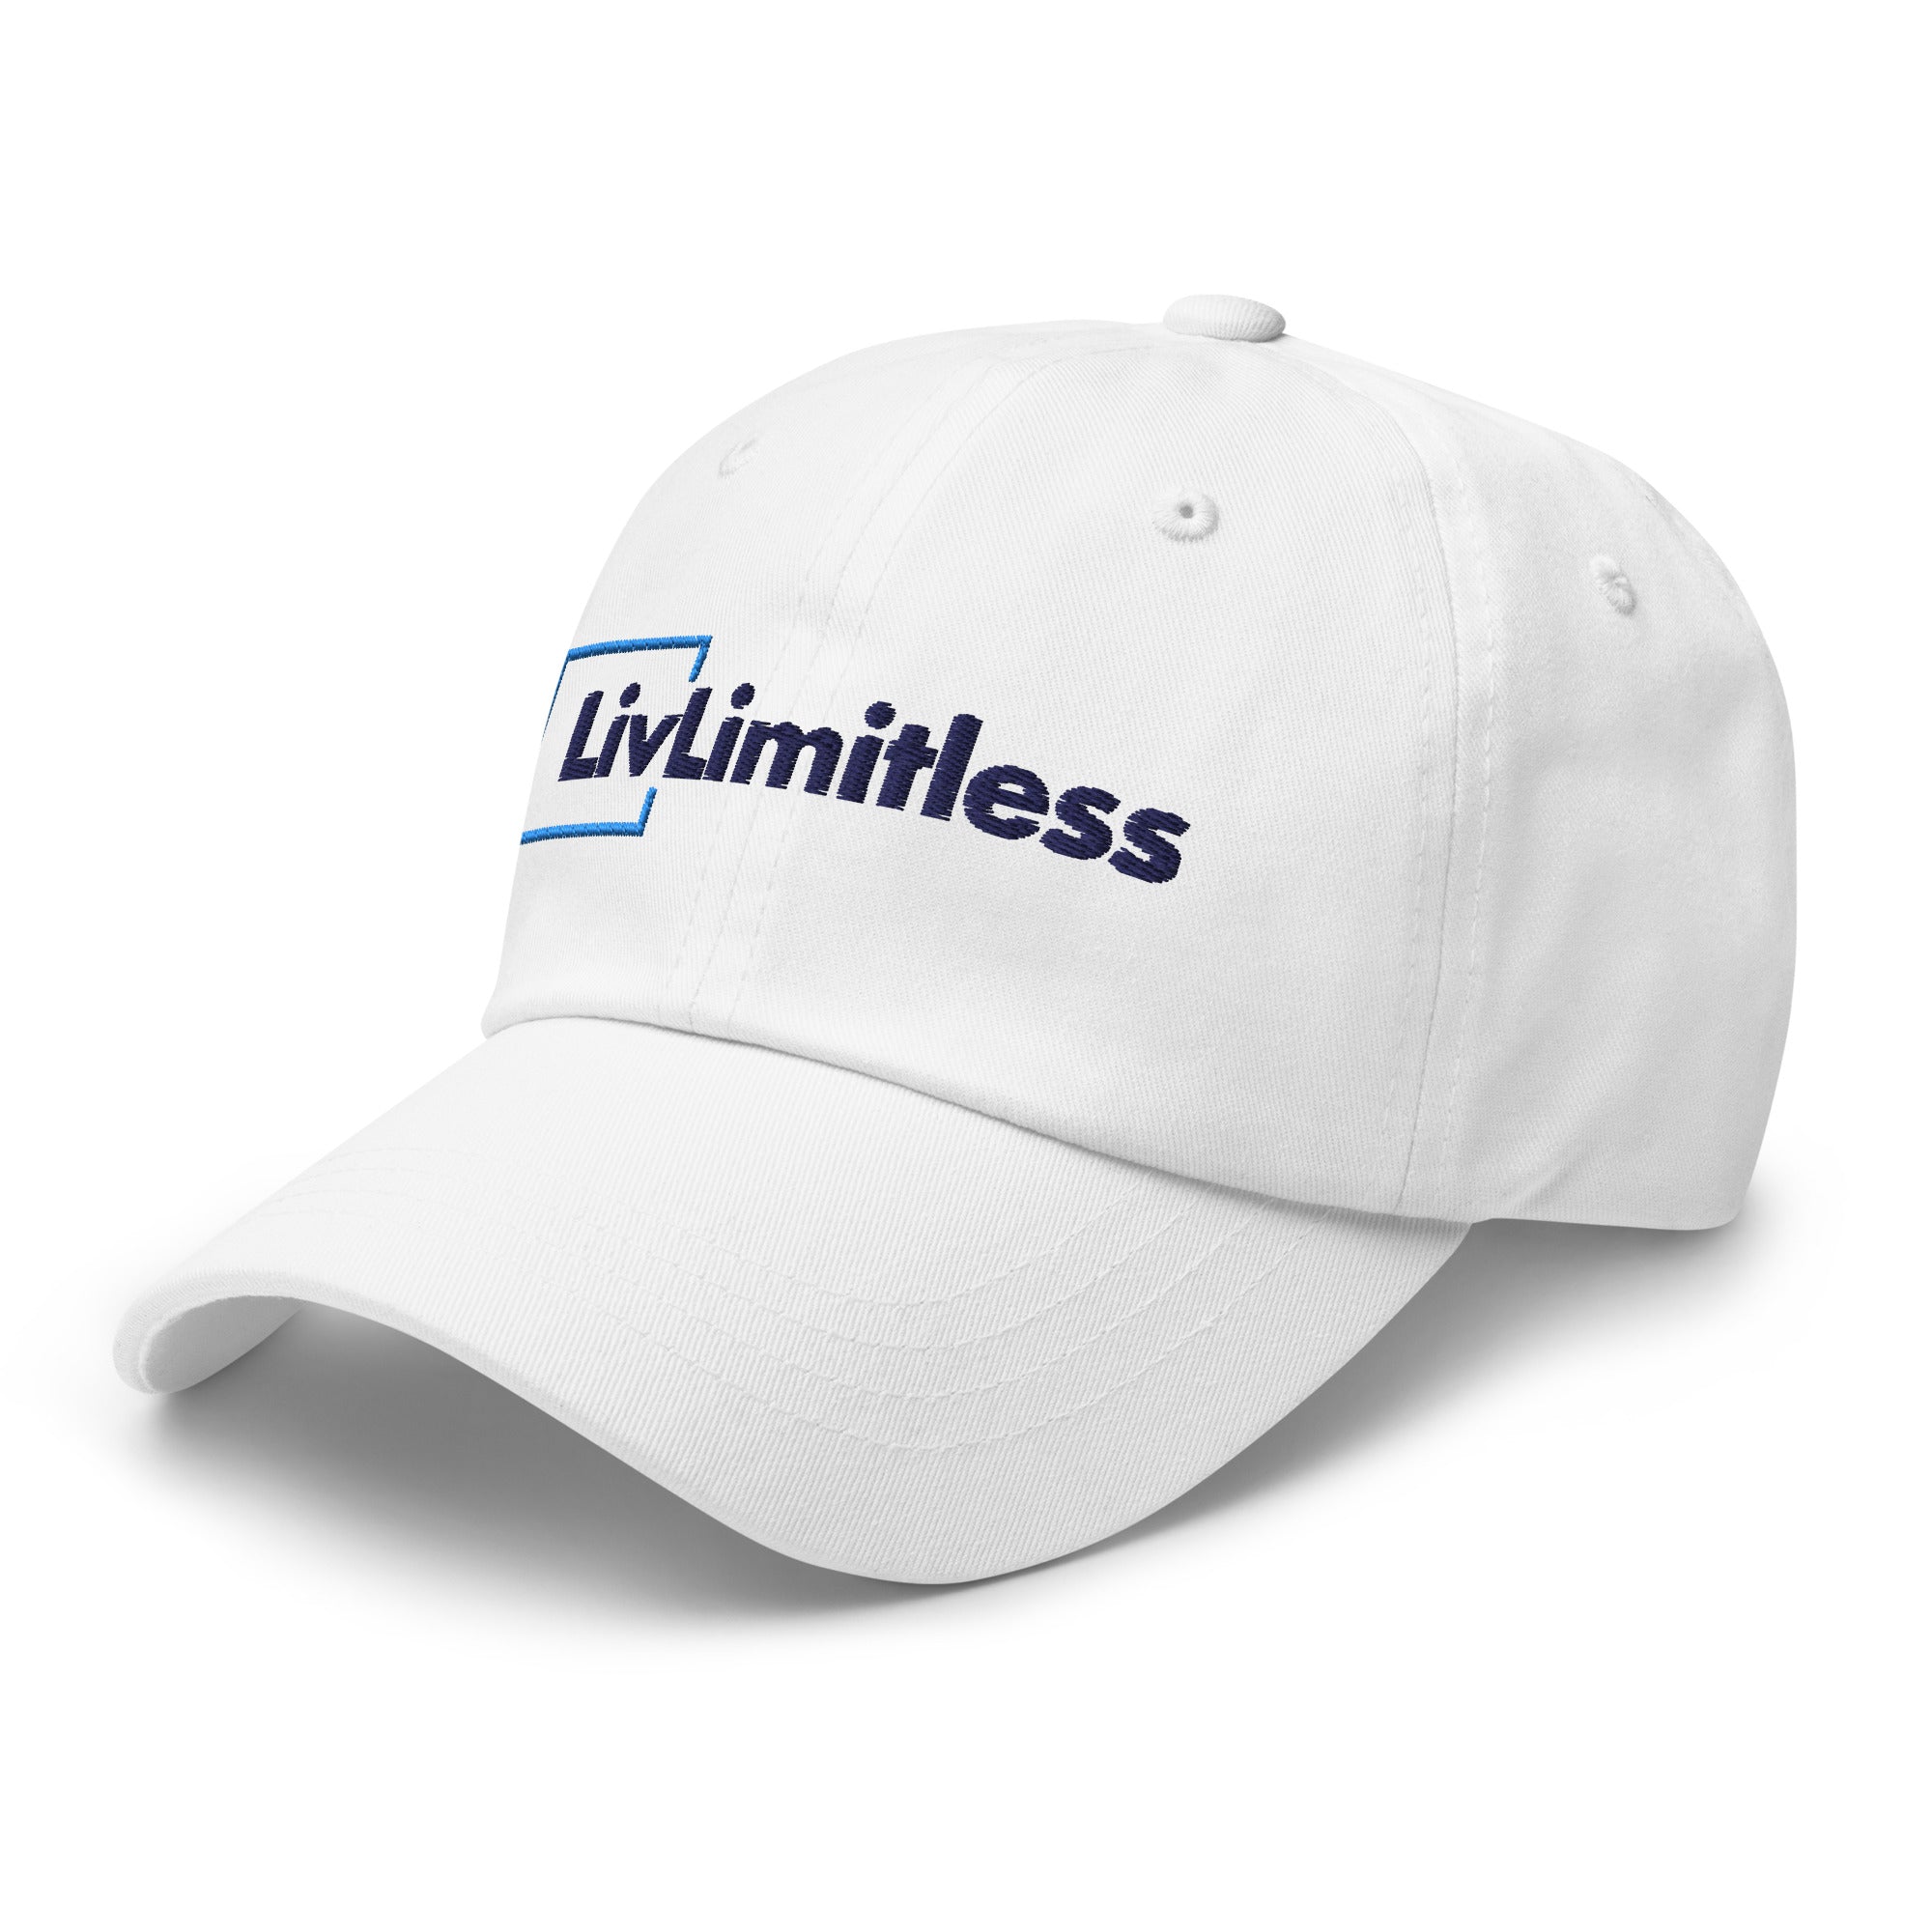 LivLimitless White Full Panel Hat